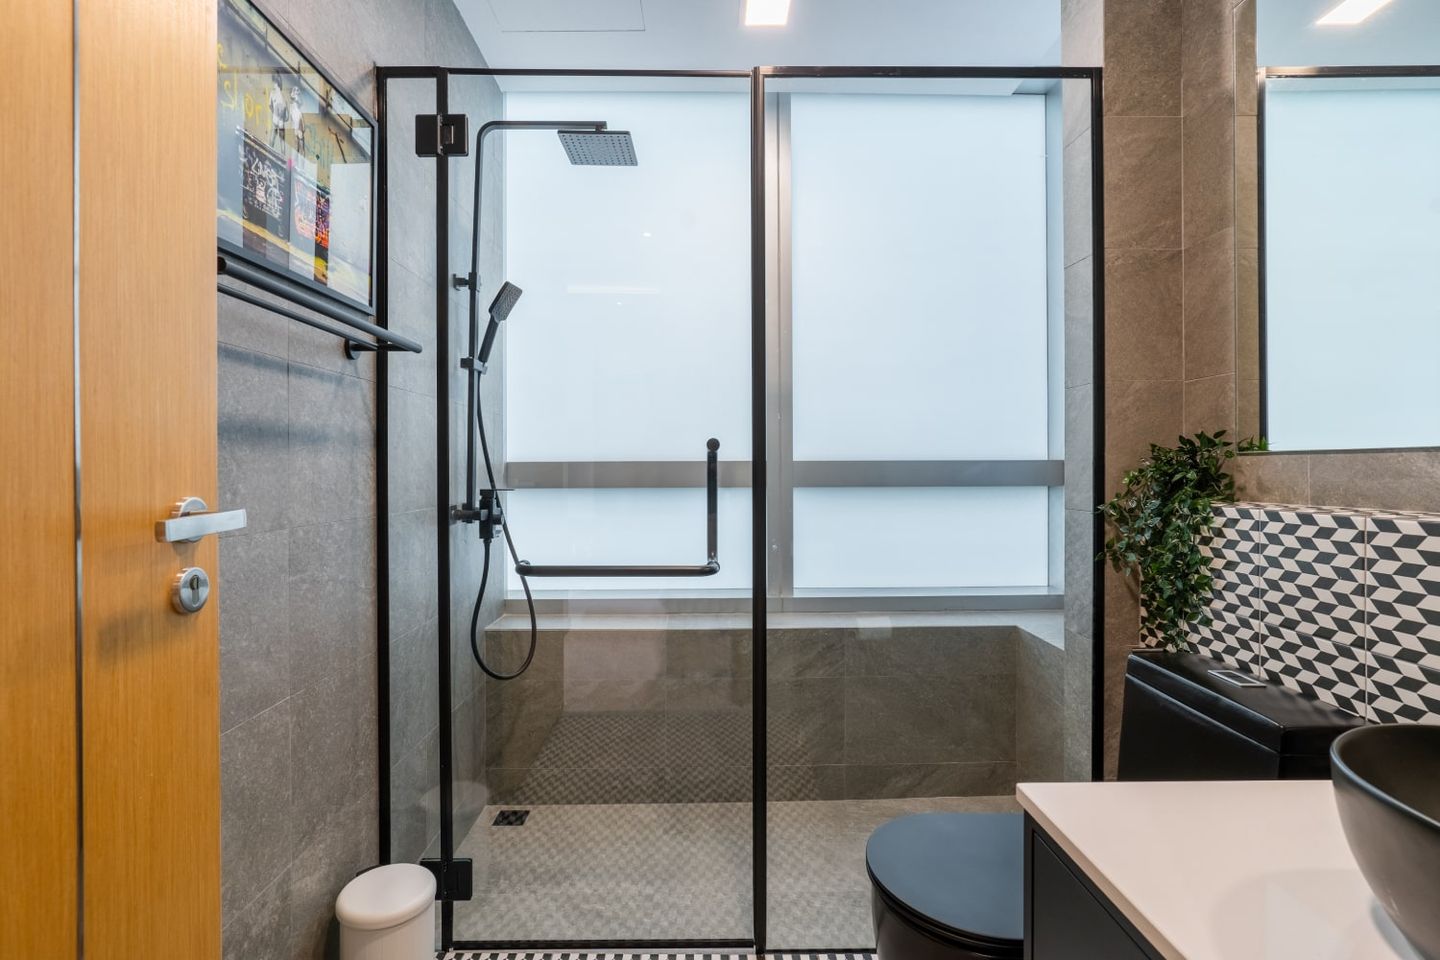 Industrial Bathroom Design With Modern Black Sanitary Fittings